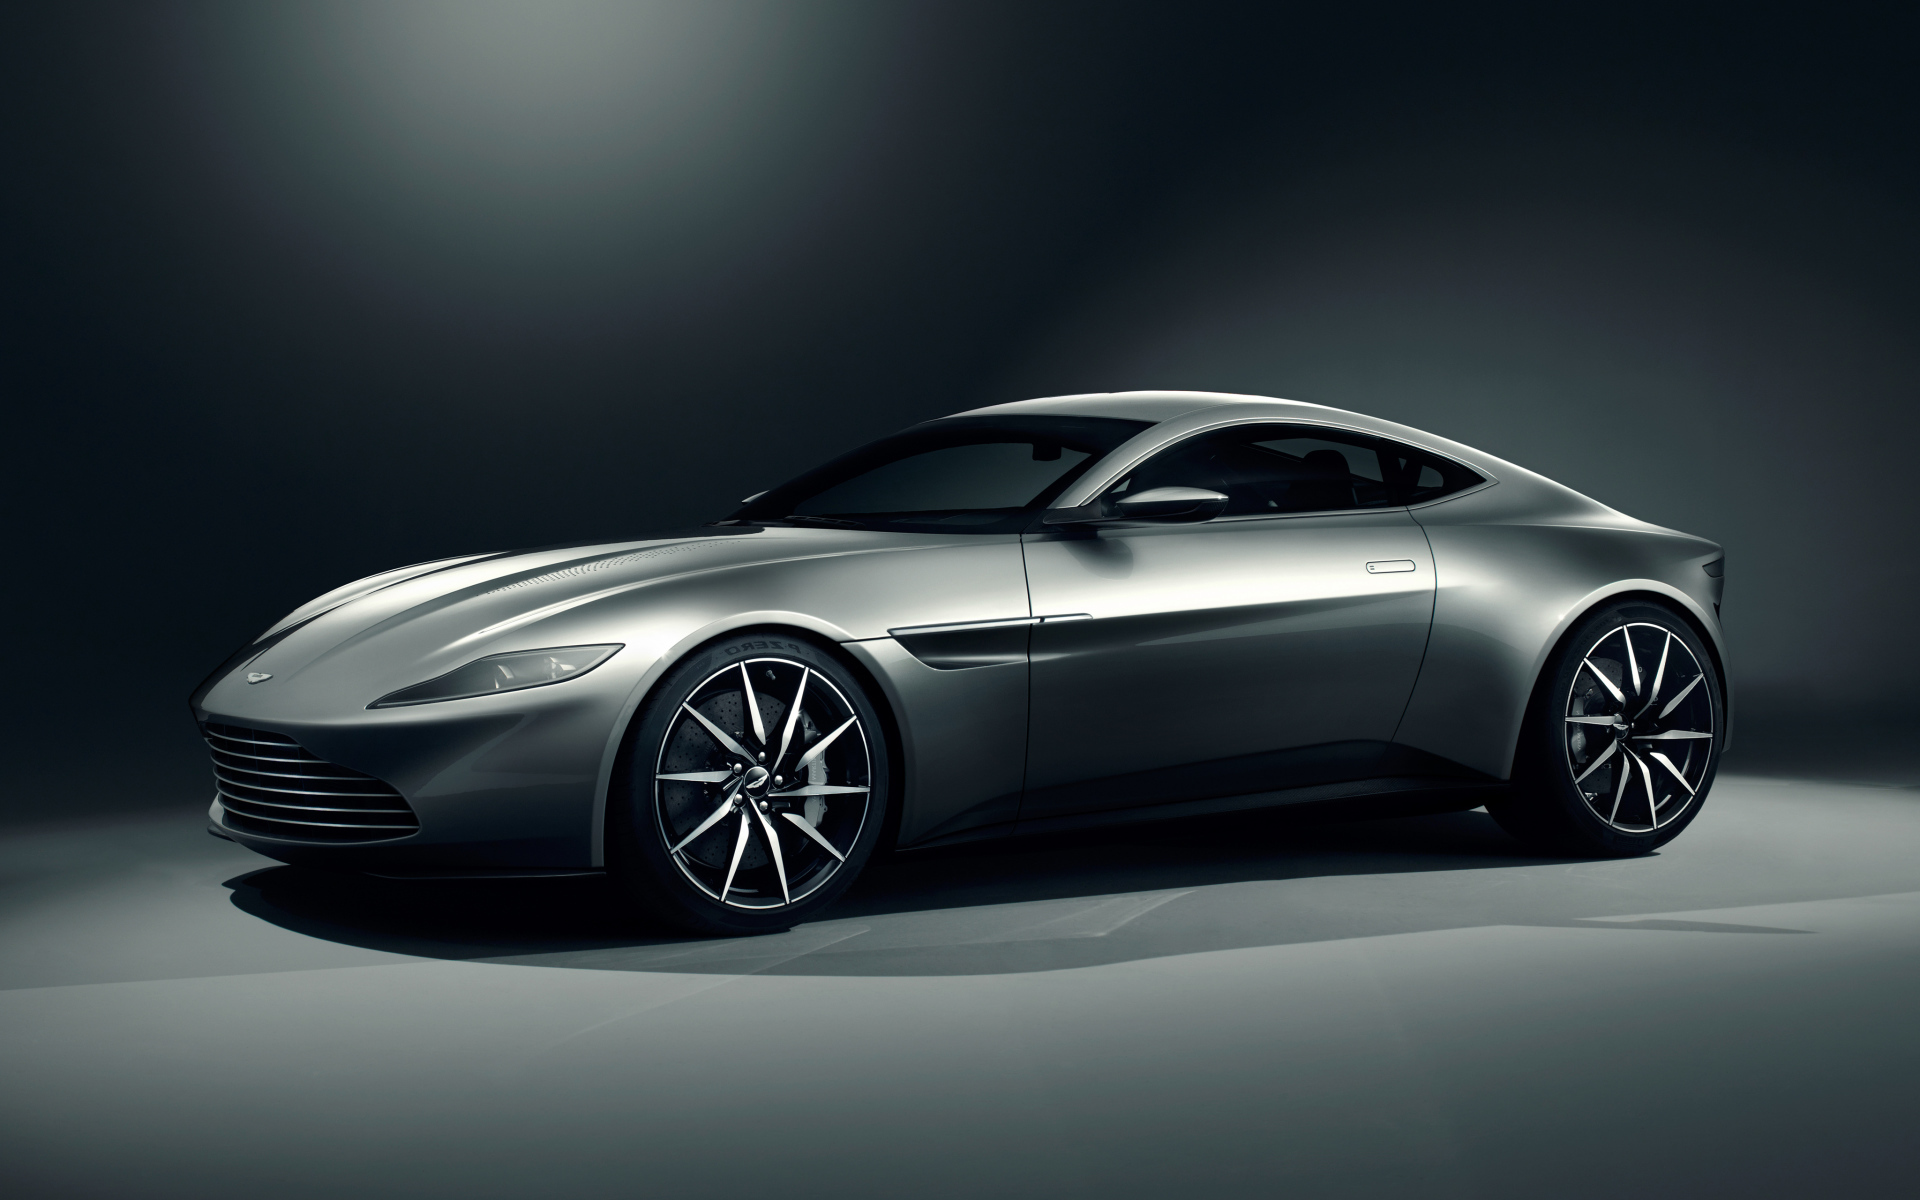 Серебристый автомобиль Aston Martin DB10 